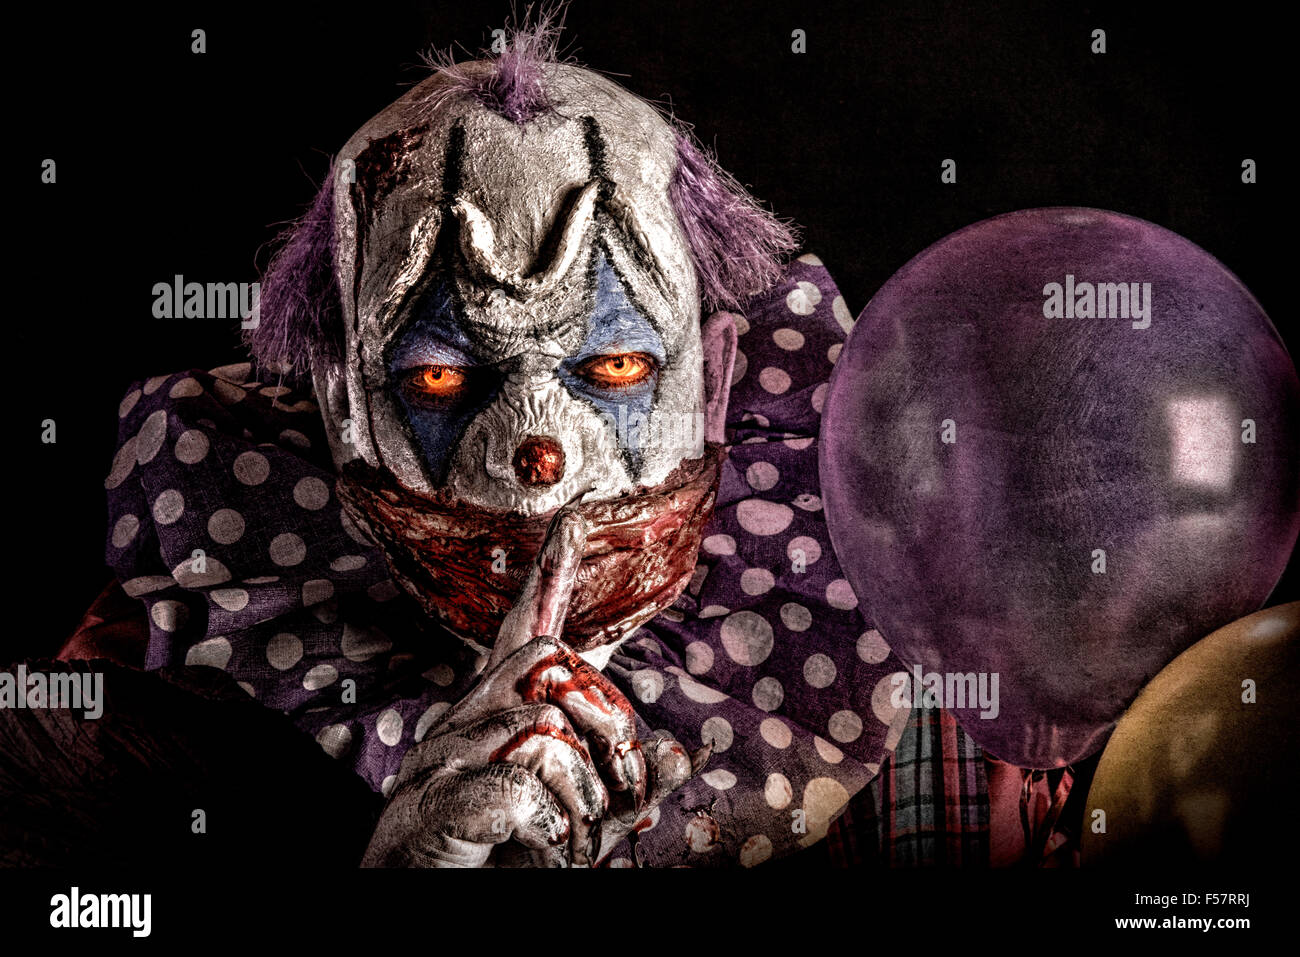 Scary creepy clown with Stock Photo